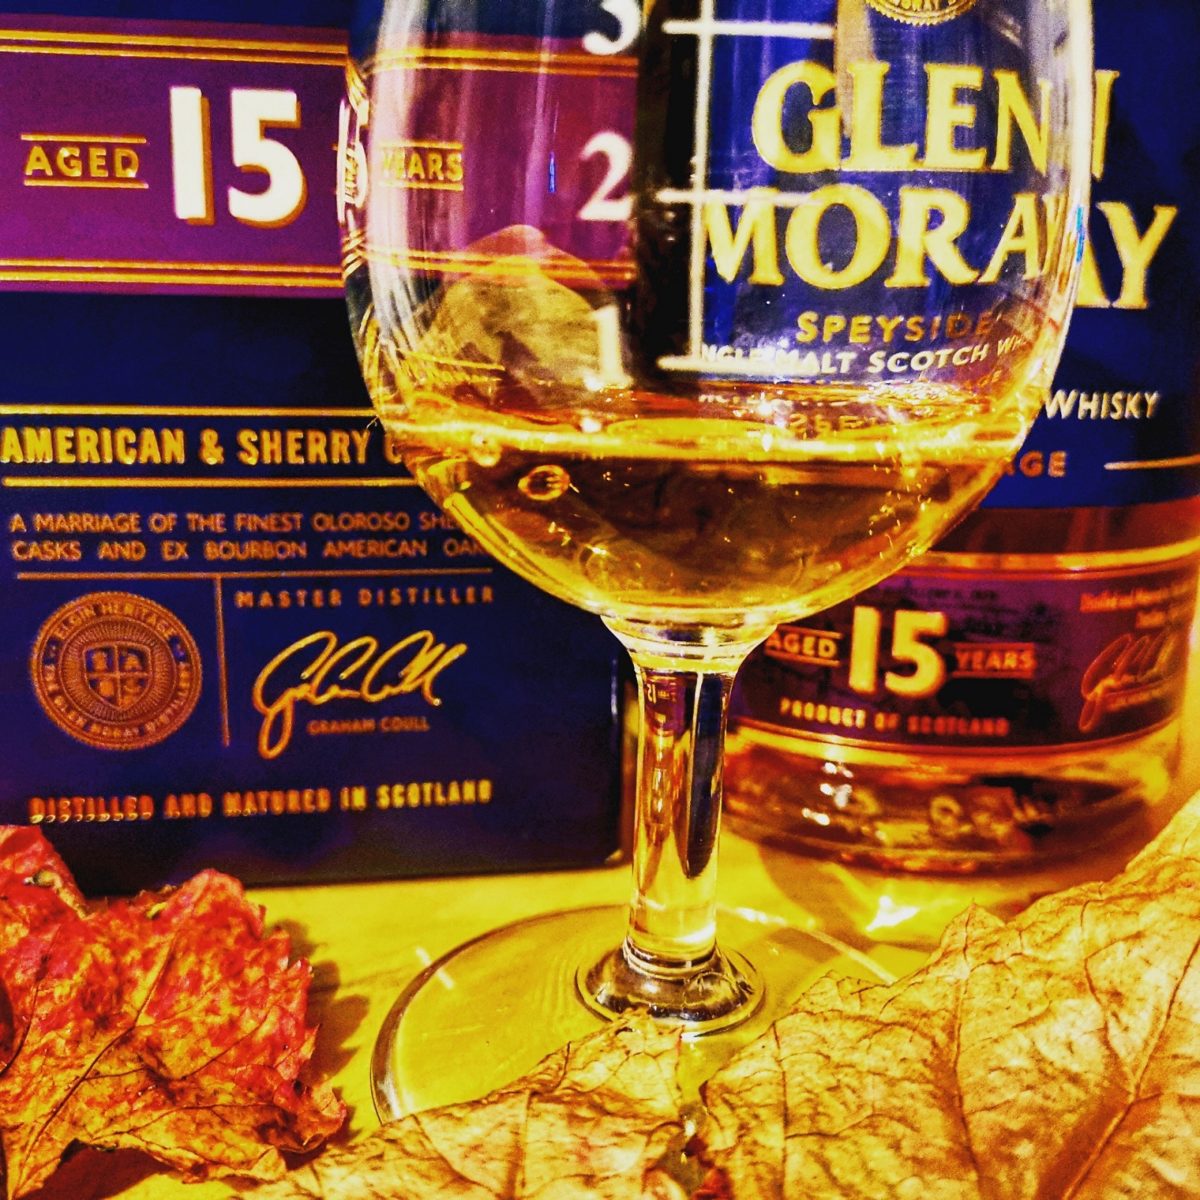 Glen Moray 15 Jahre Elgin Heritage Speyside Single Malt Scotch Whisky